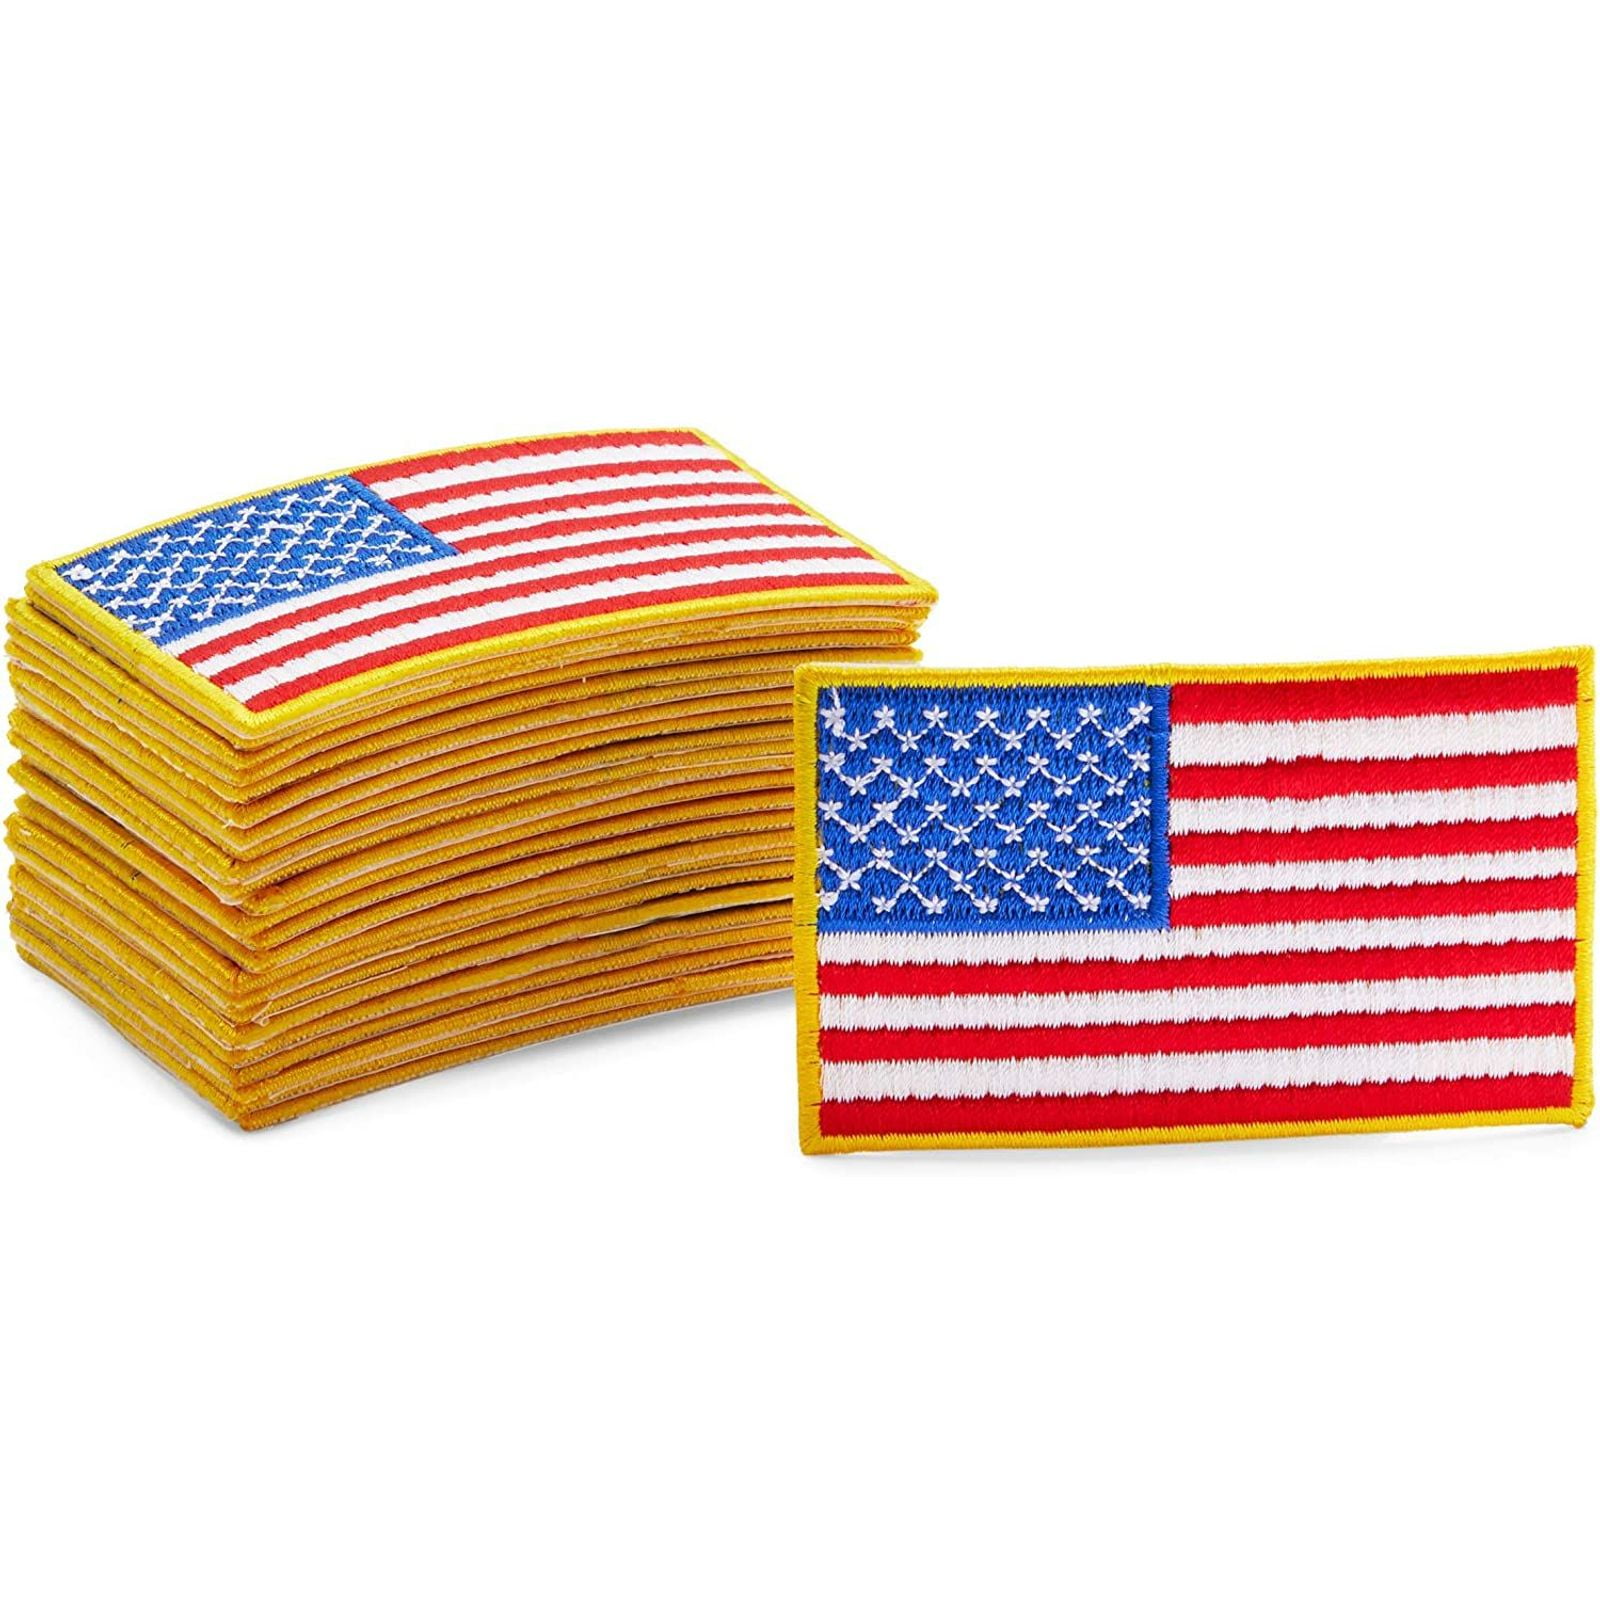 Wallpaper Wall Border Sailboats USA with American Flags